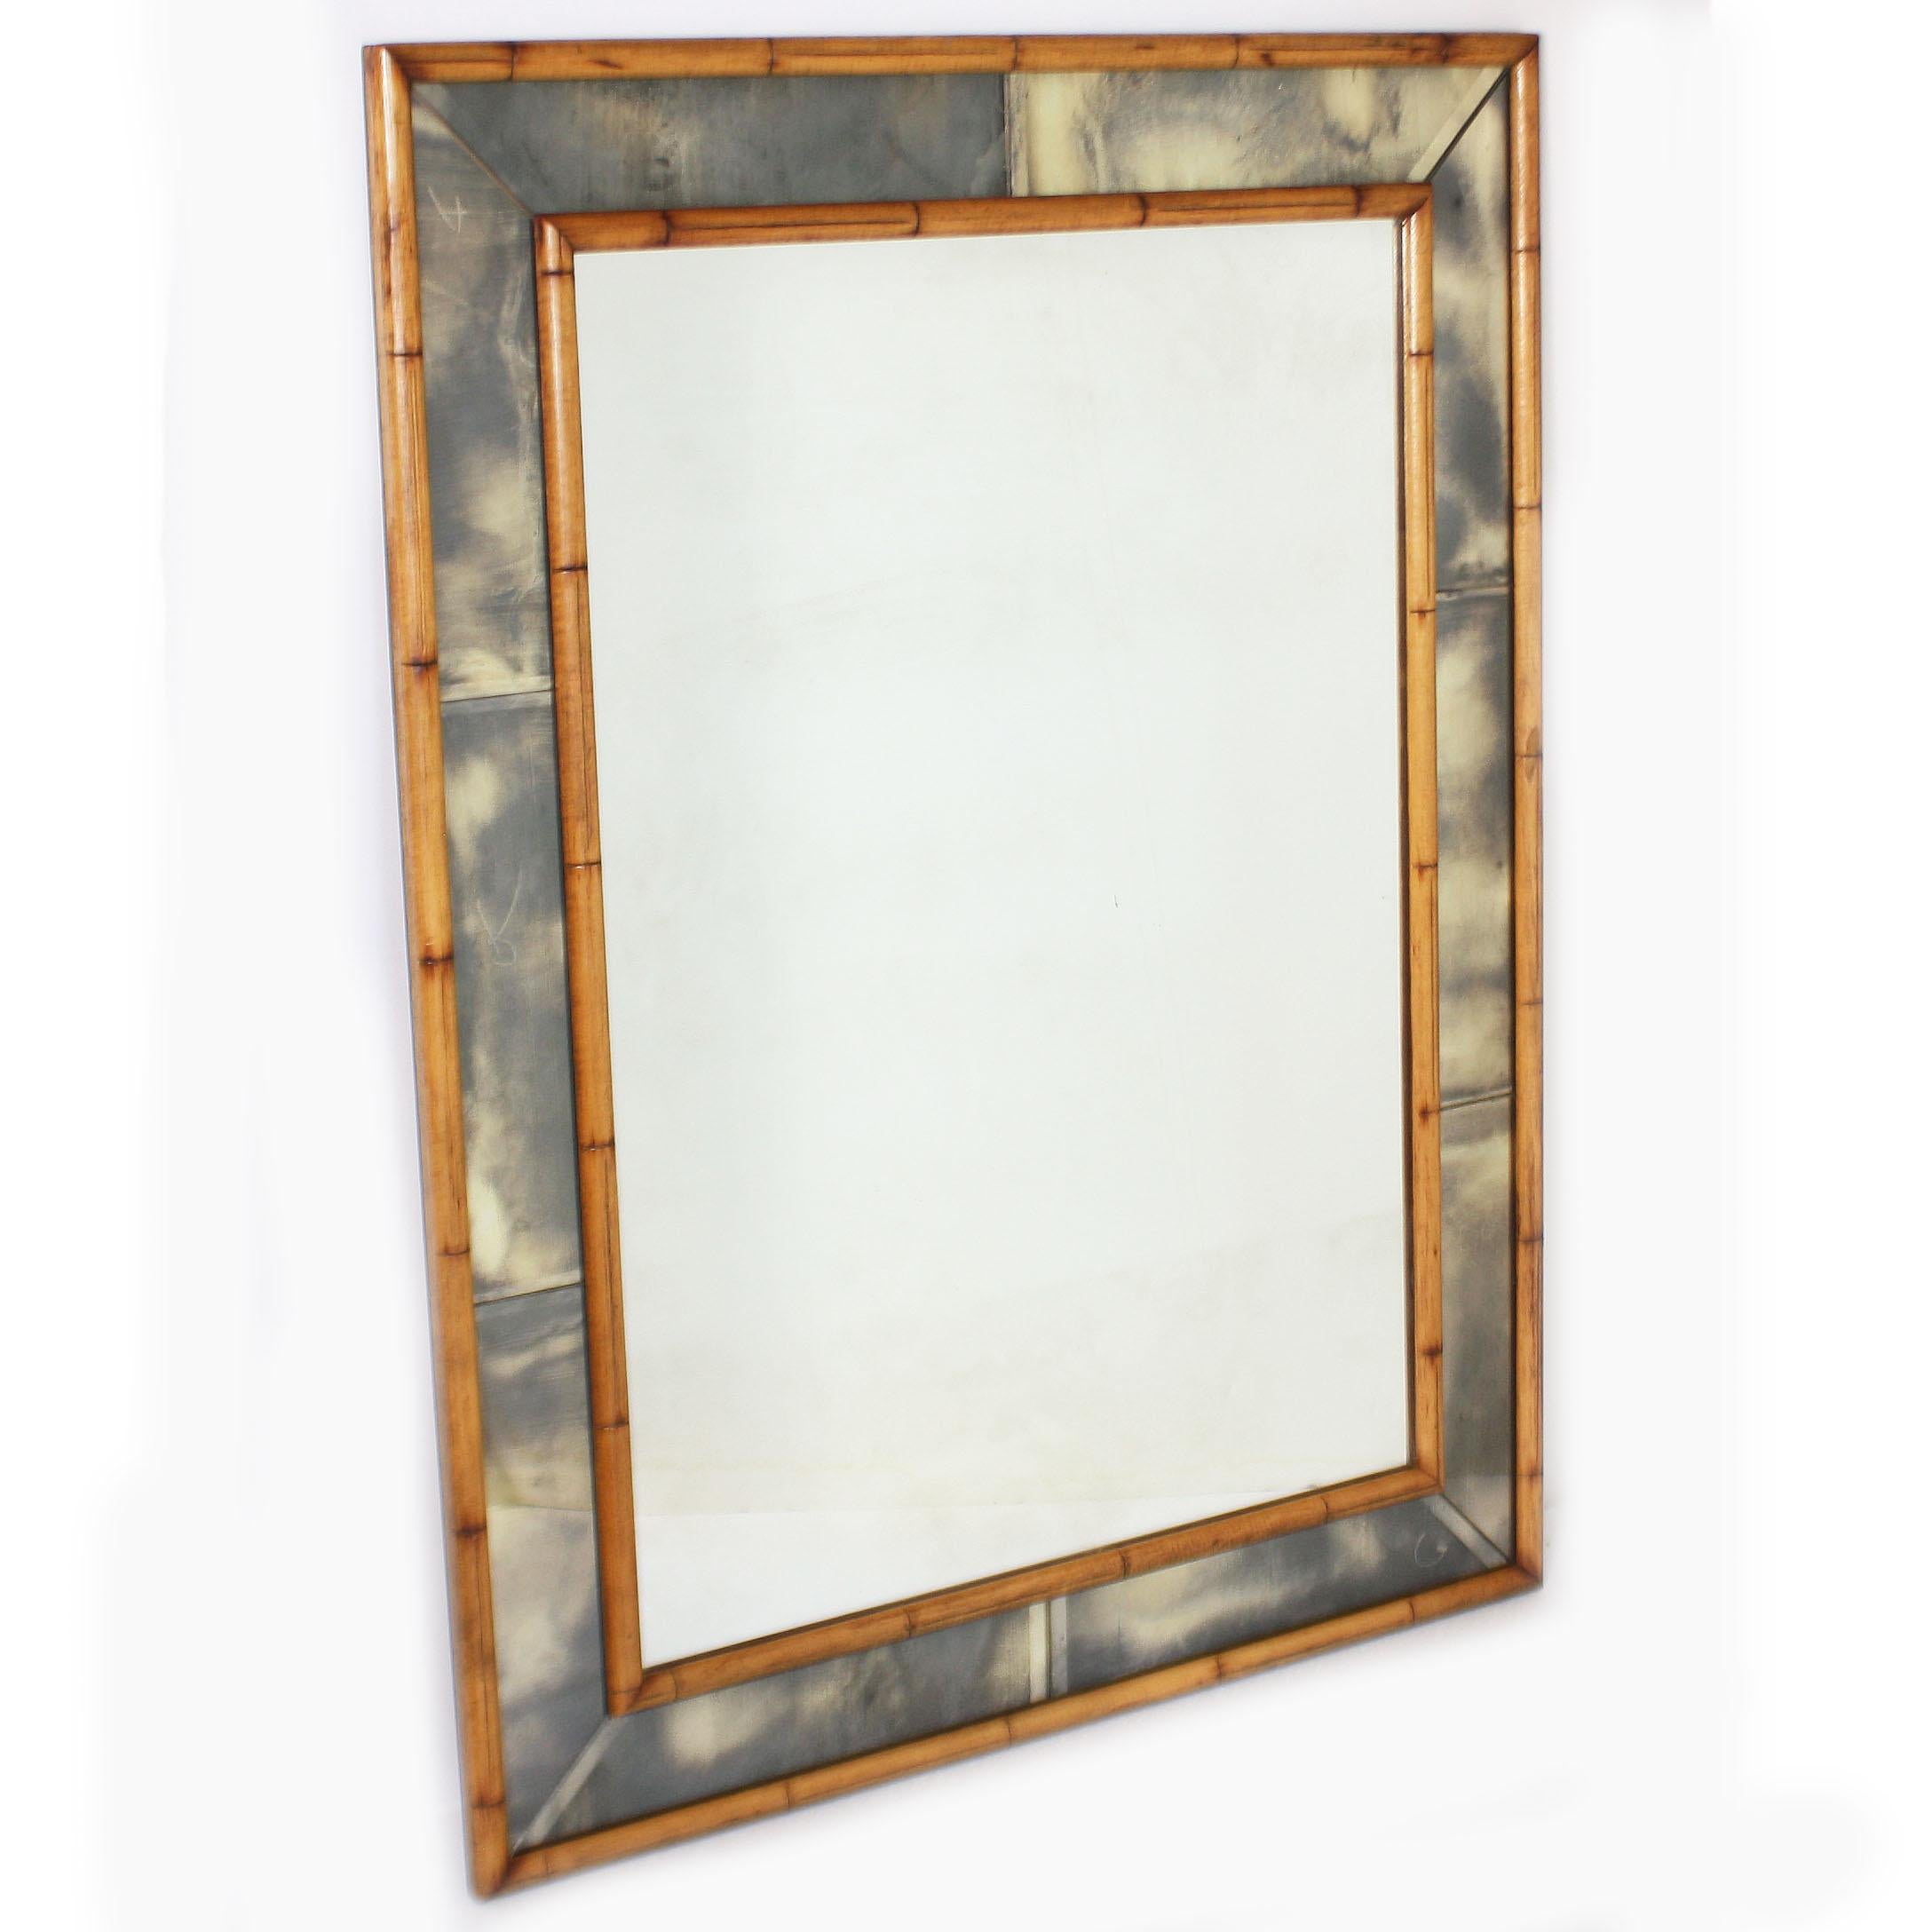 Faux bamboo mirror with smokey mirrored frame, circa 1970.
$3900.